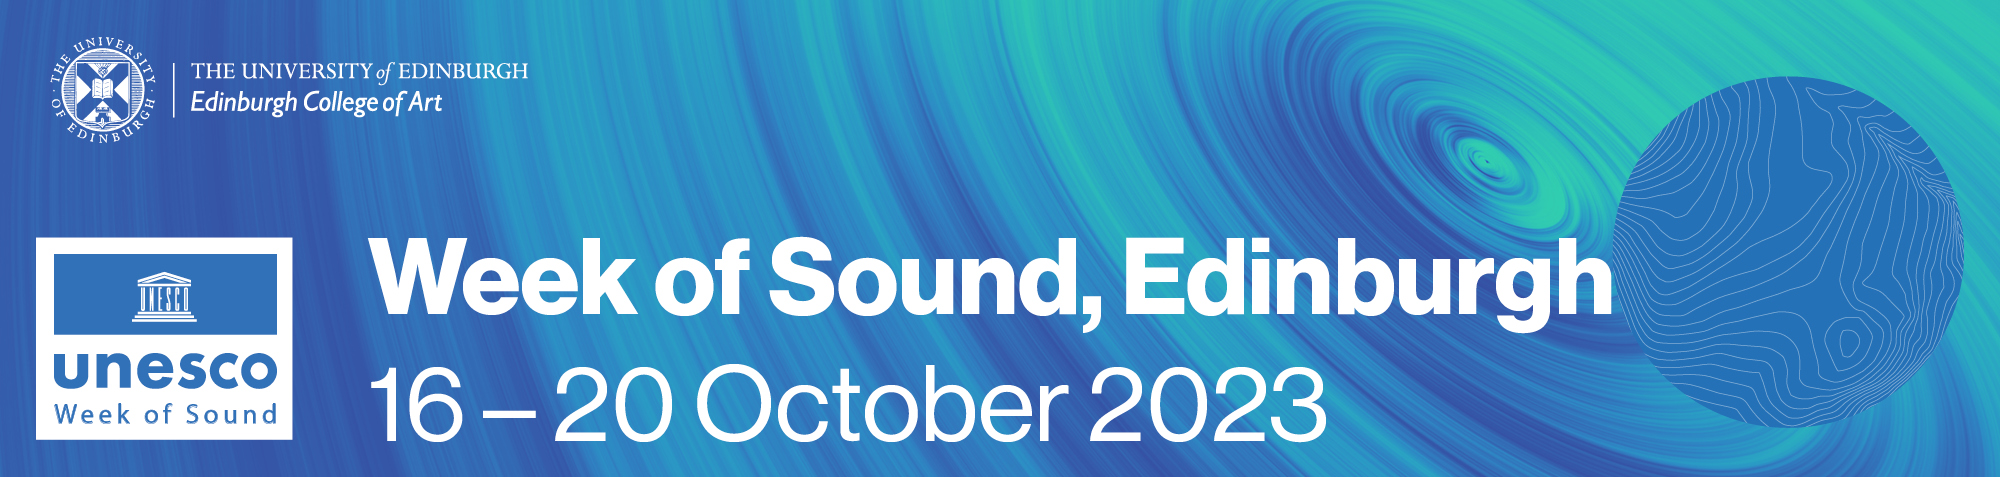 UNESCO Week of Sound, Edinburgh 16-20 October 2023